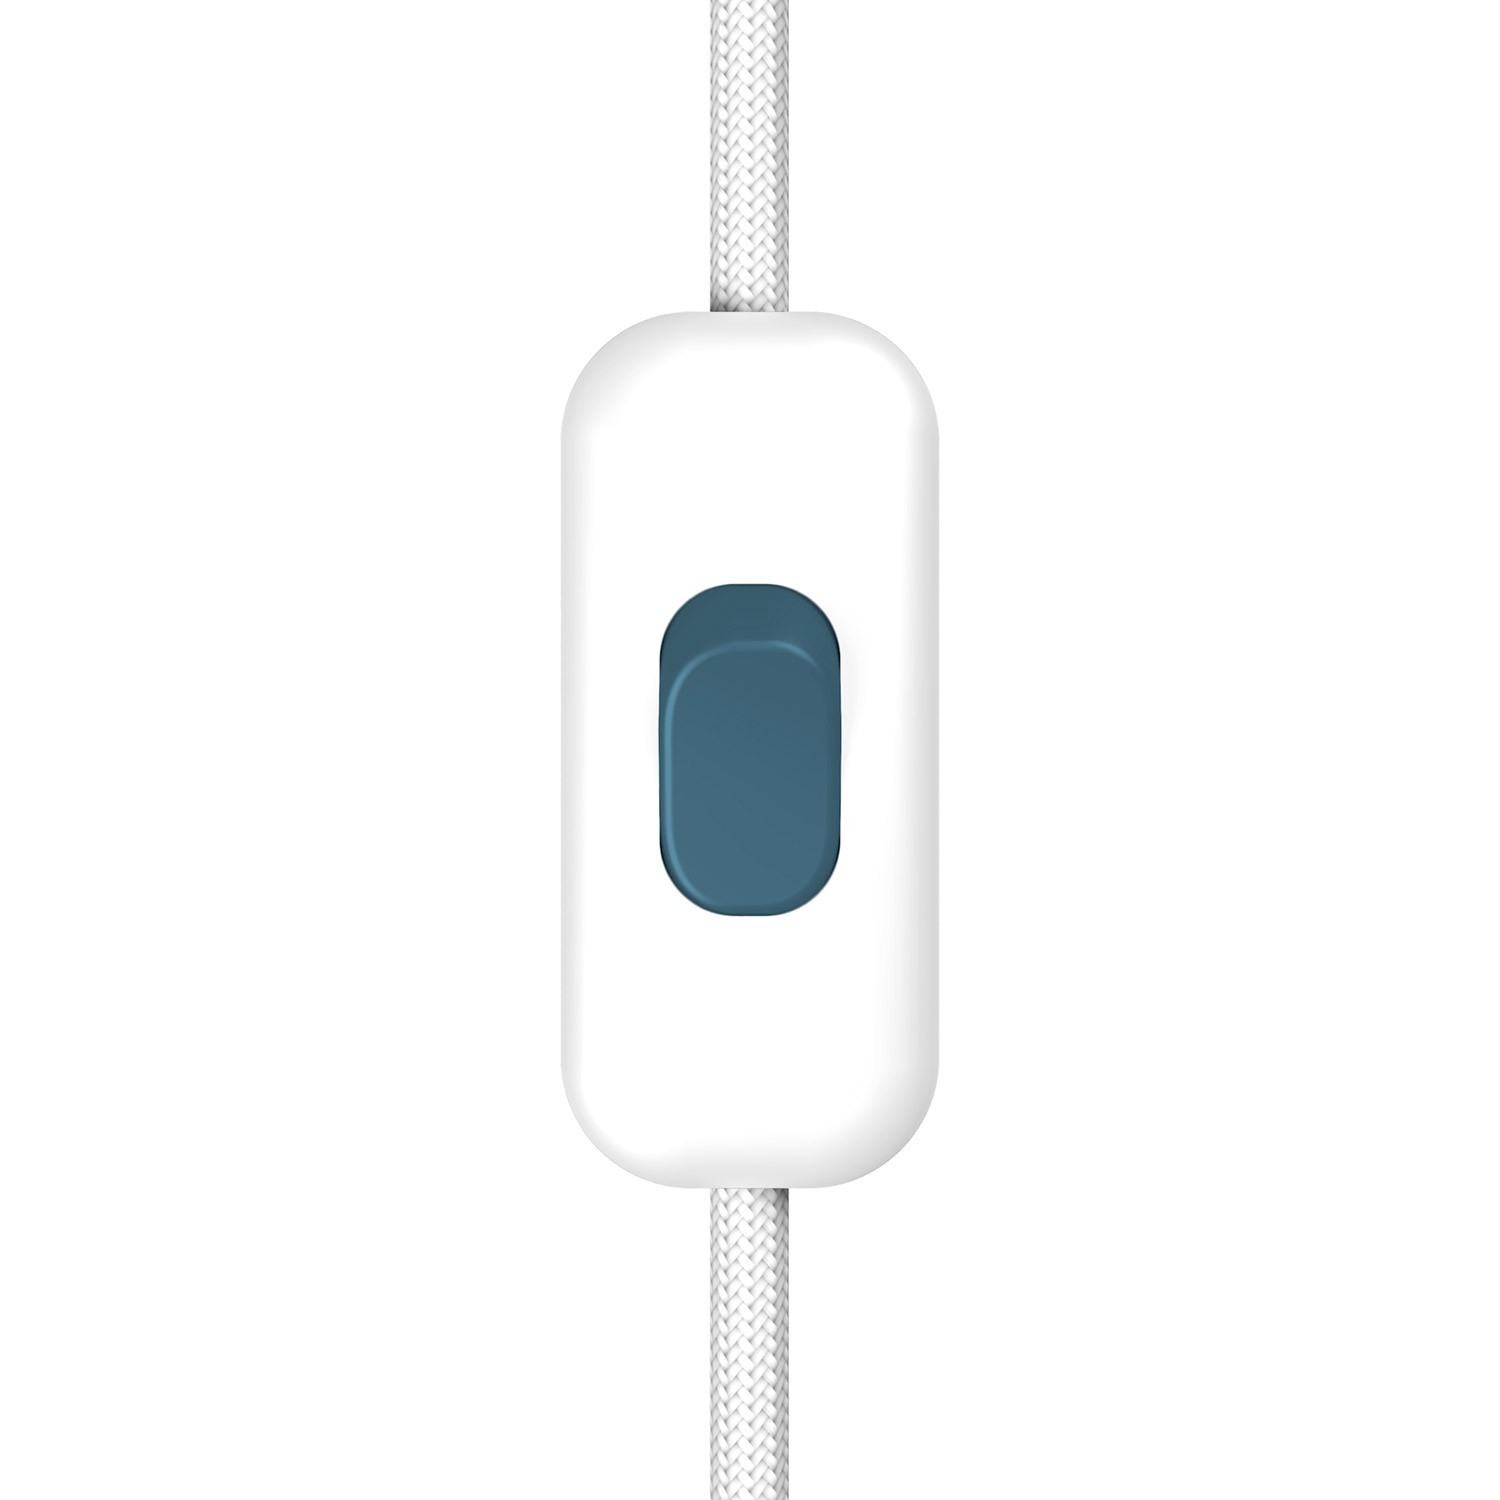 Inline single-pole switch Creative Switch White